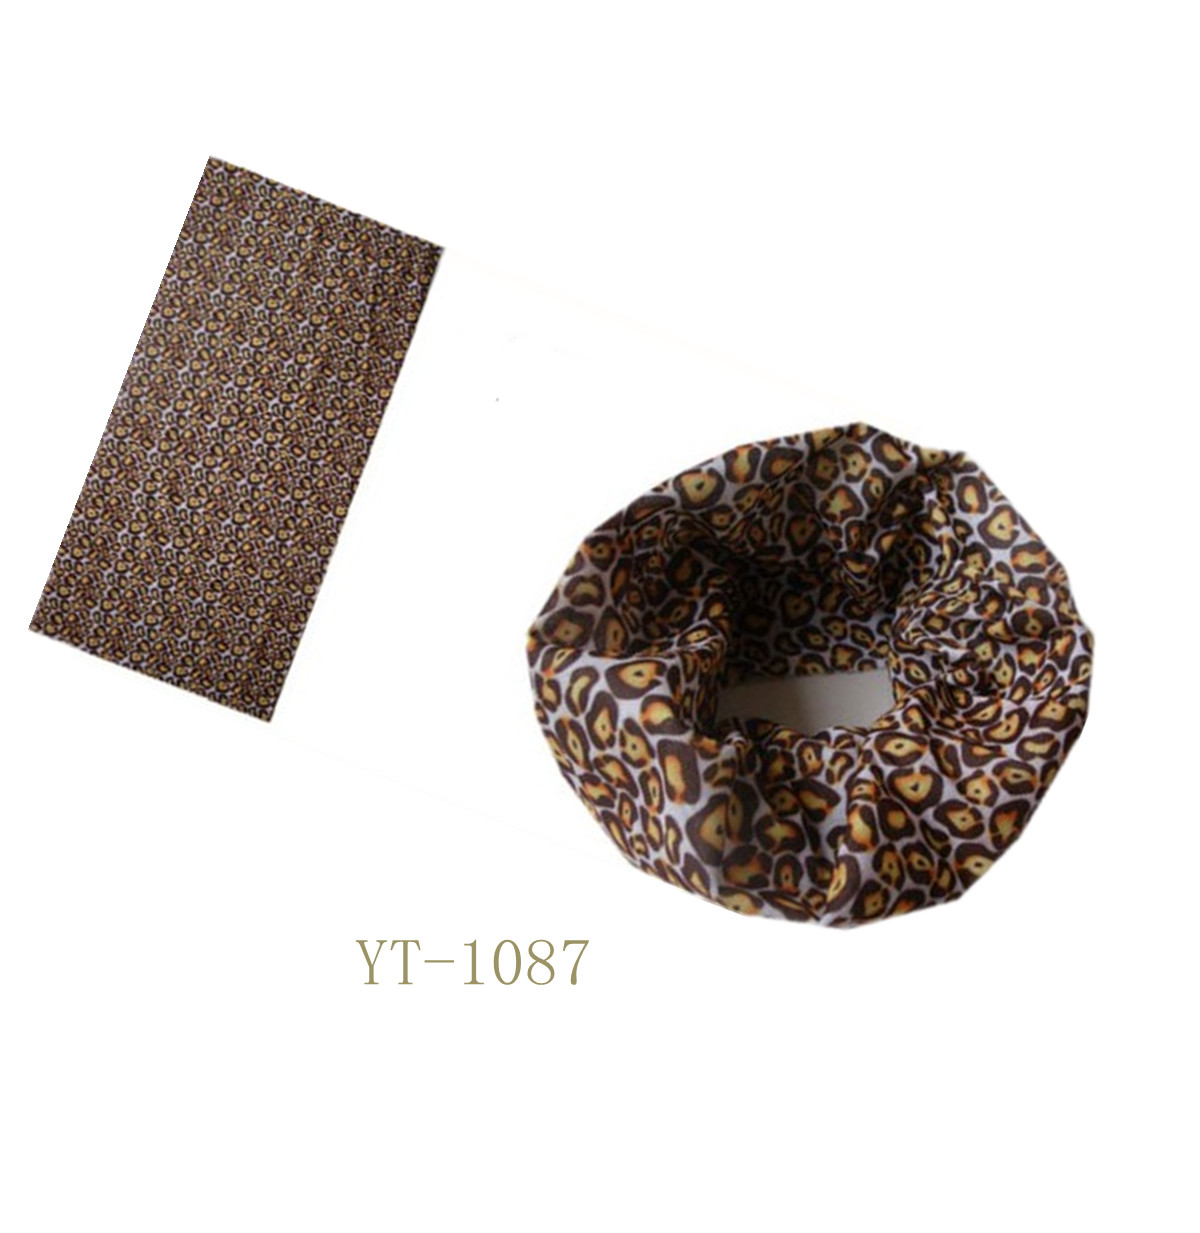 100%Polyester Scarf, Outdoor Sport Headwear in Leopard Design (YT-1083)